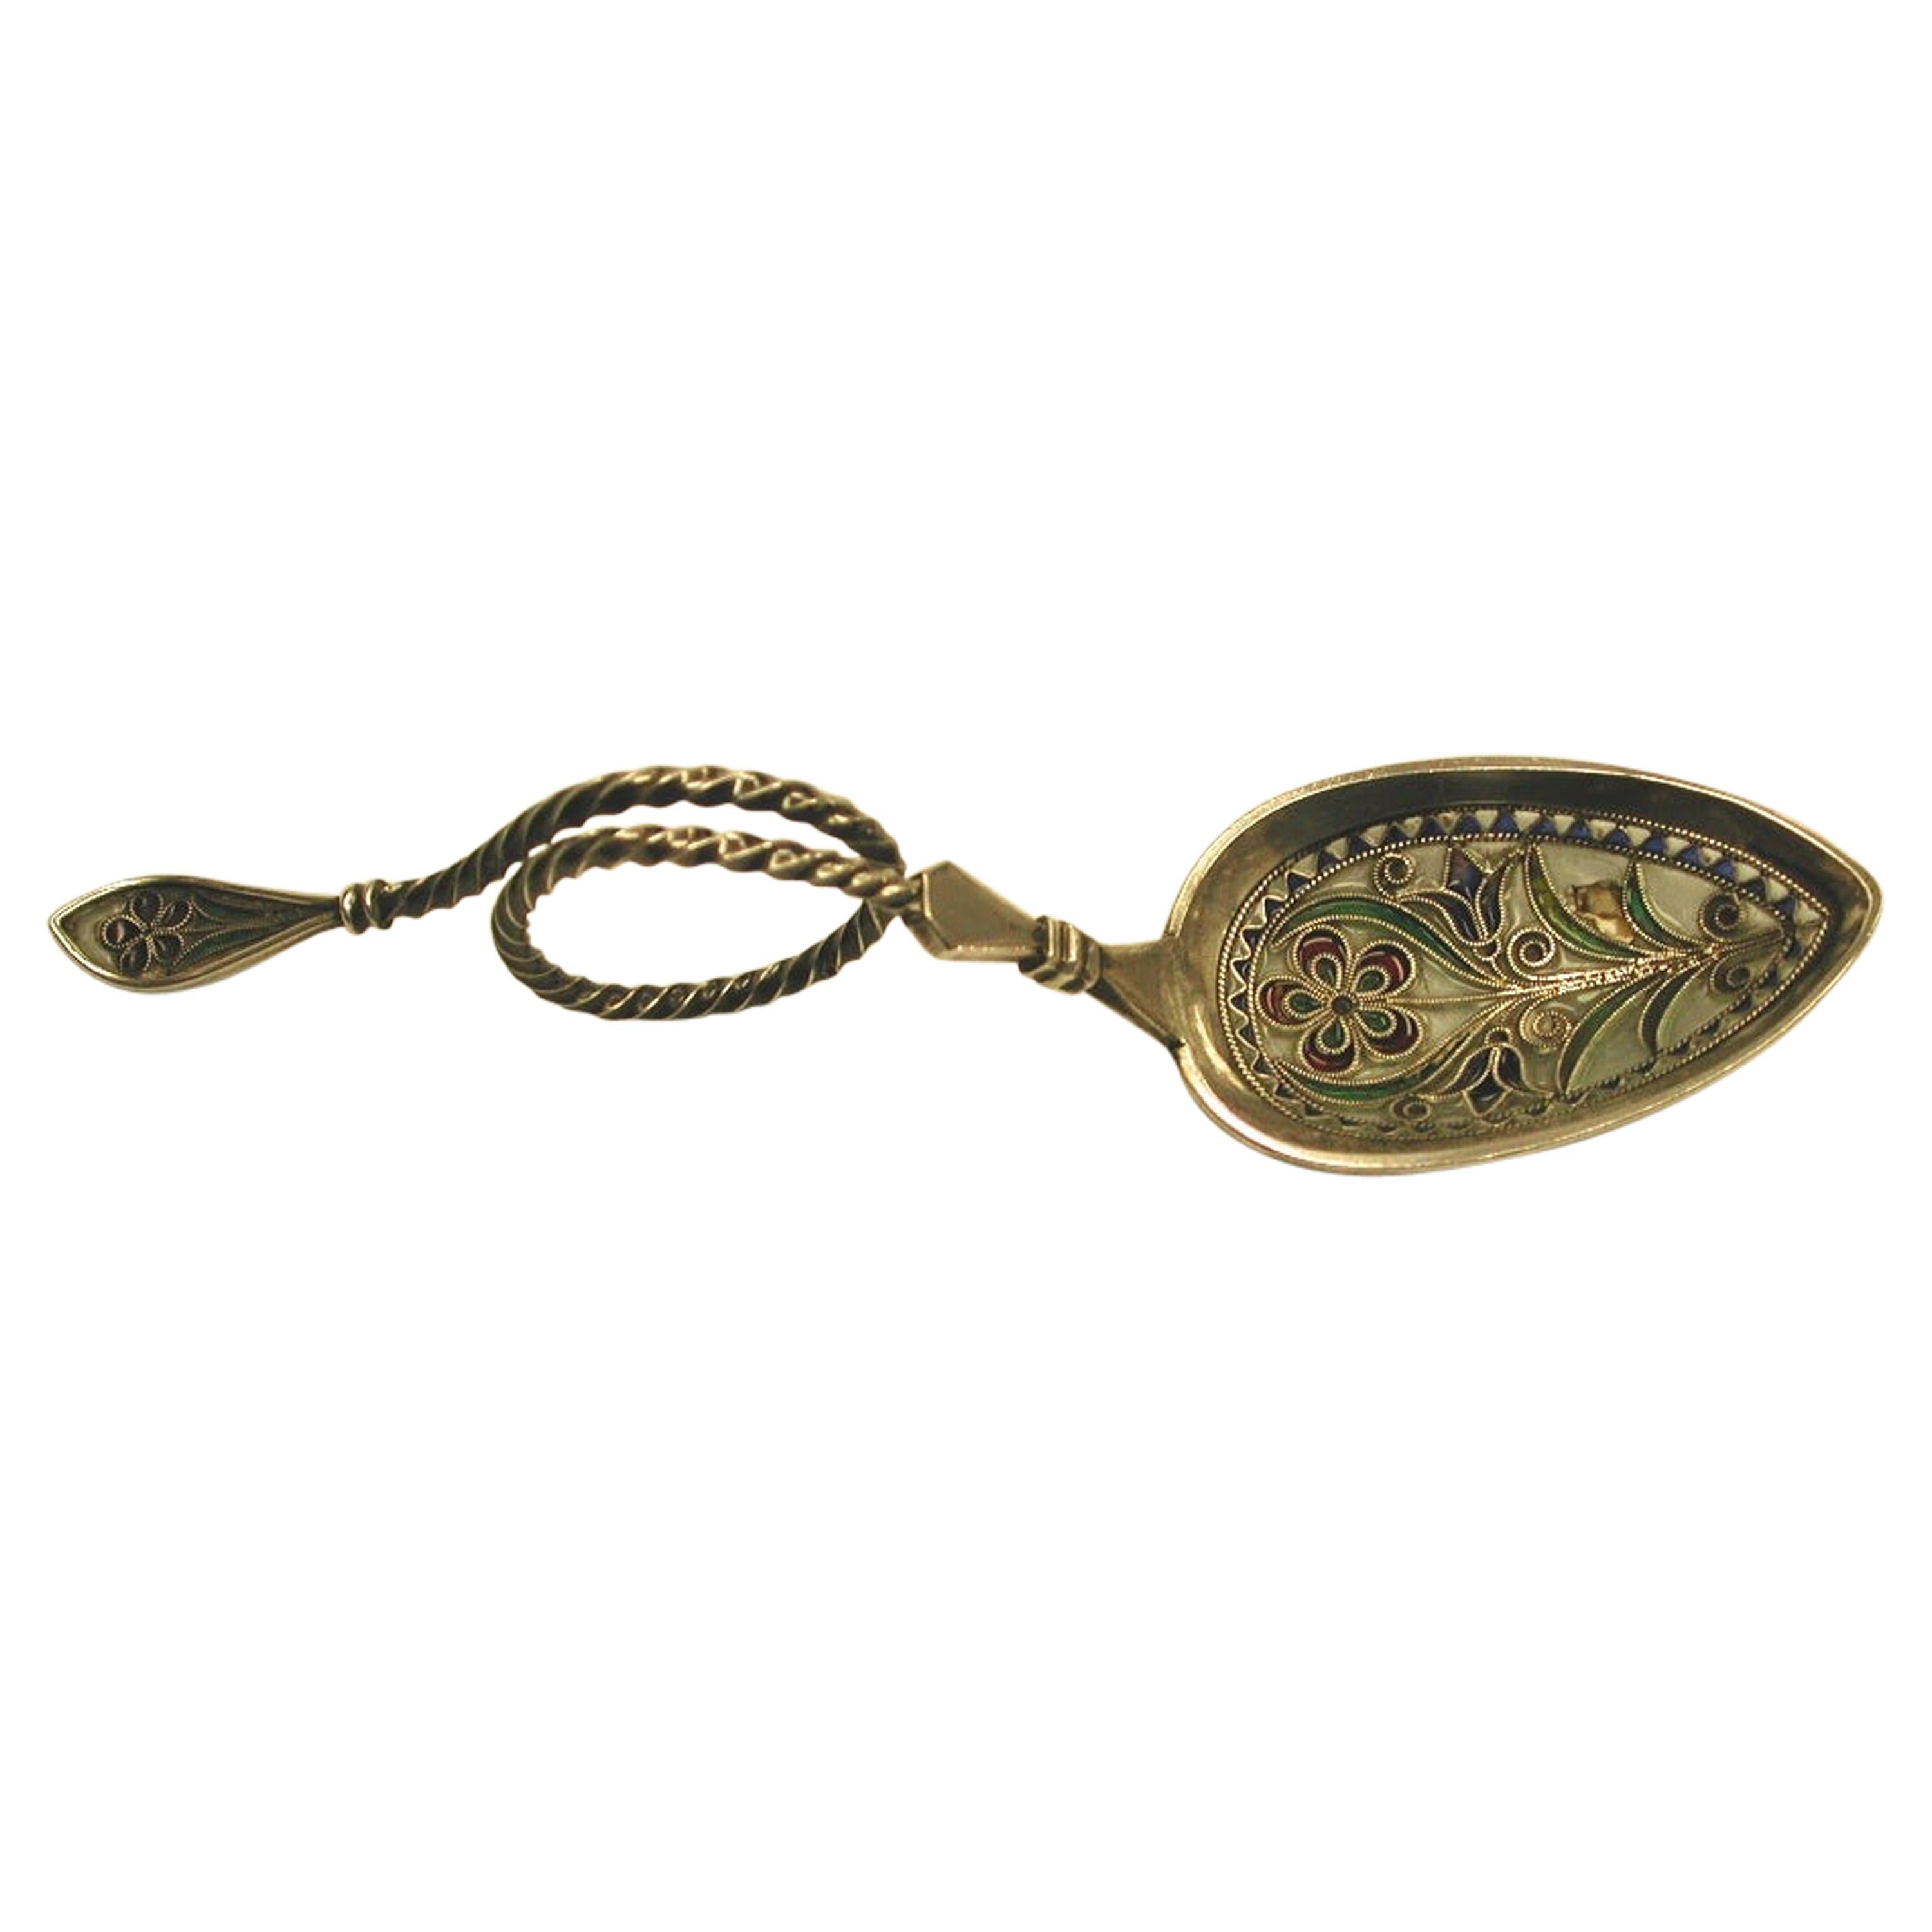 Norwegian Plique-a-Jour and Silver Decorative Spoon, circa 1900